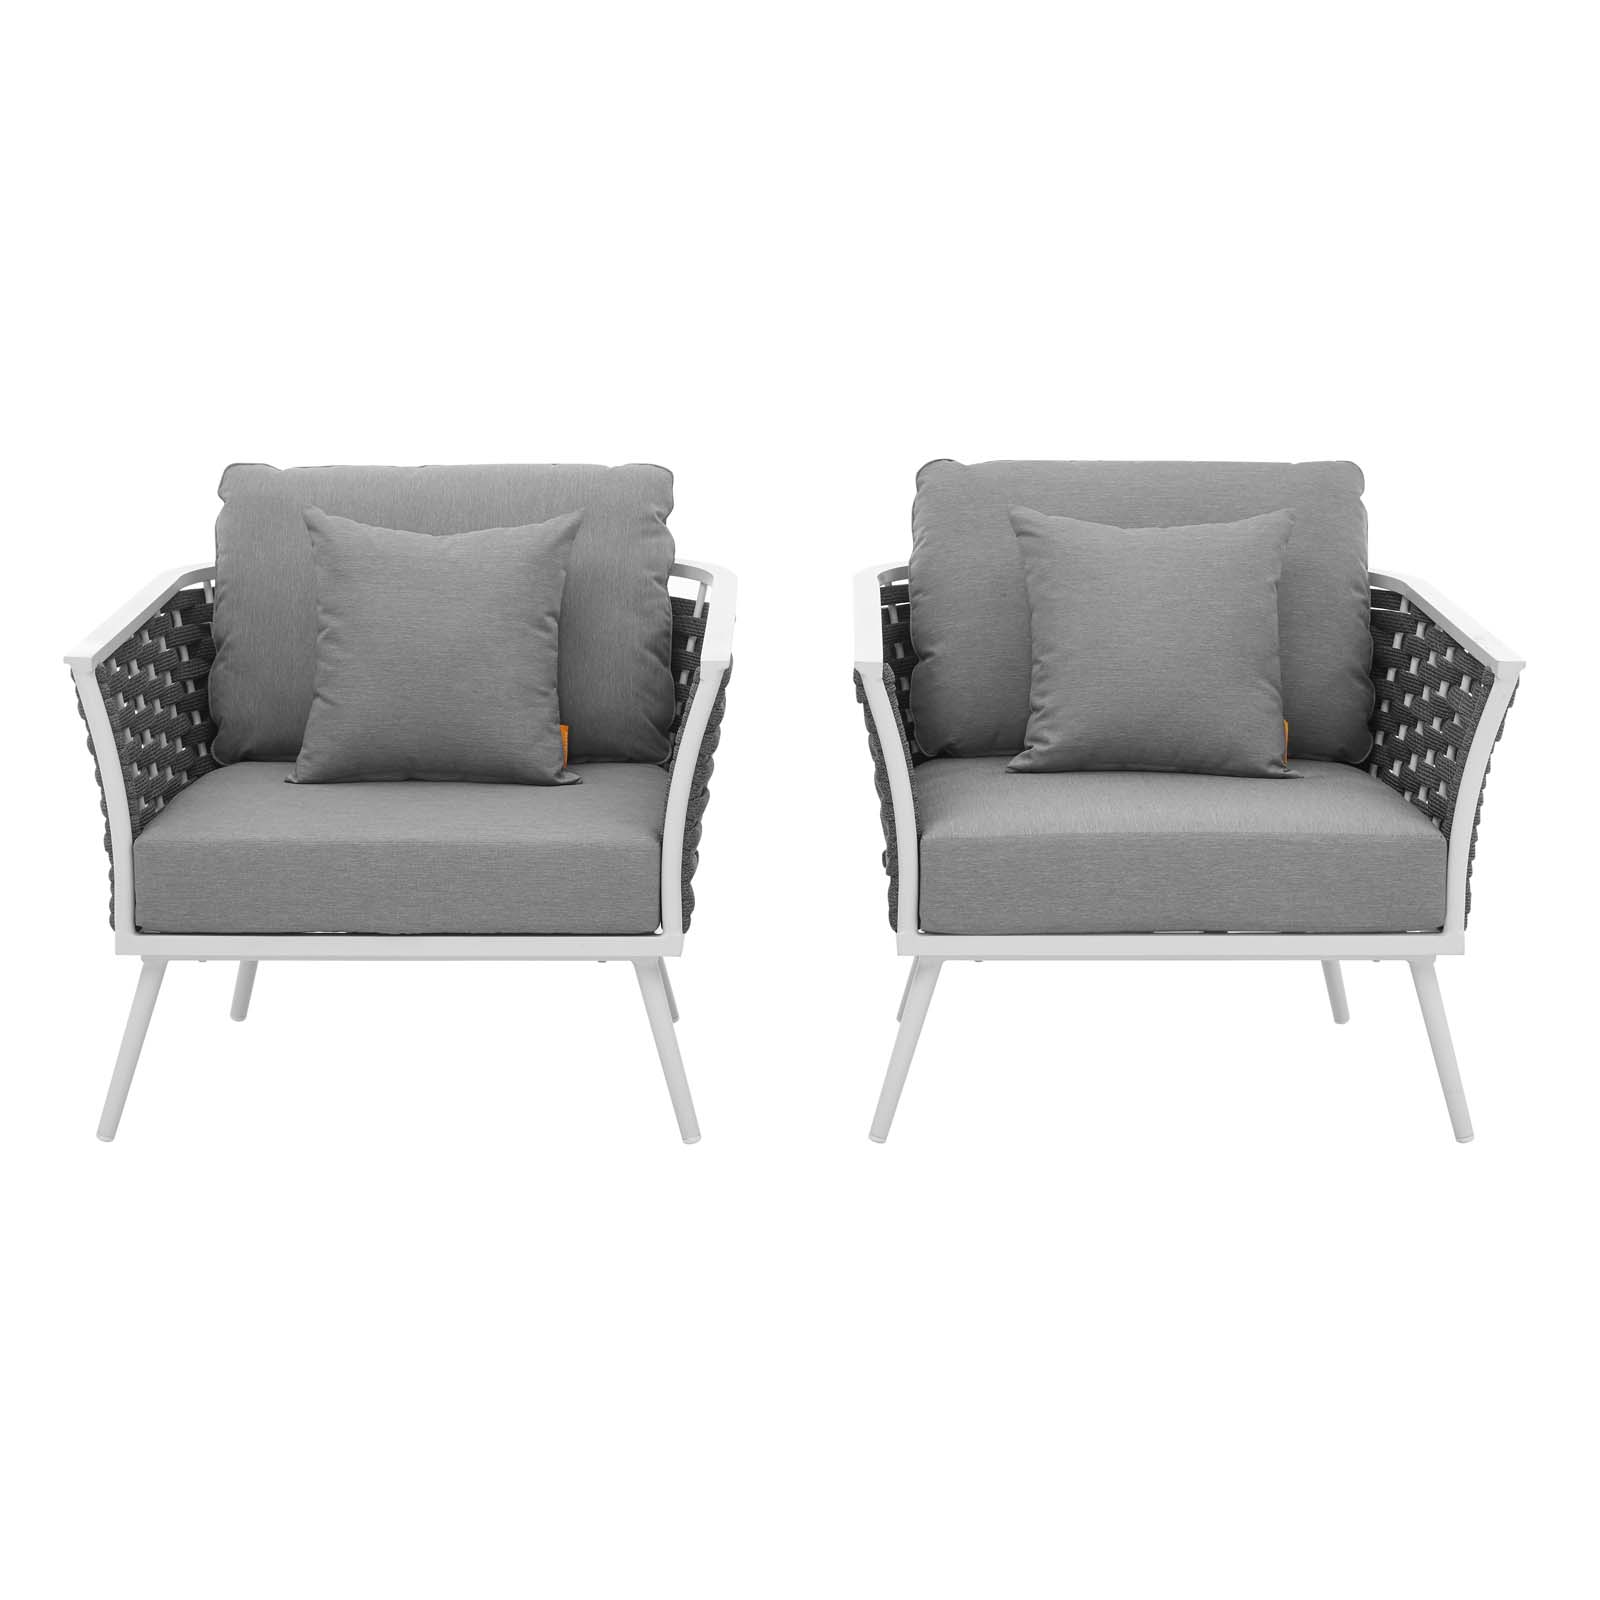 Modern Contemporary Urban Outdoor Patio Balcony Garden Furniture Lounge Chair Armchair, Set of Two, Fabric Aluminium, White Grey Gray - image 4 of 6